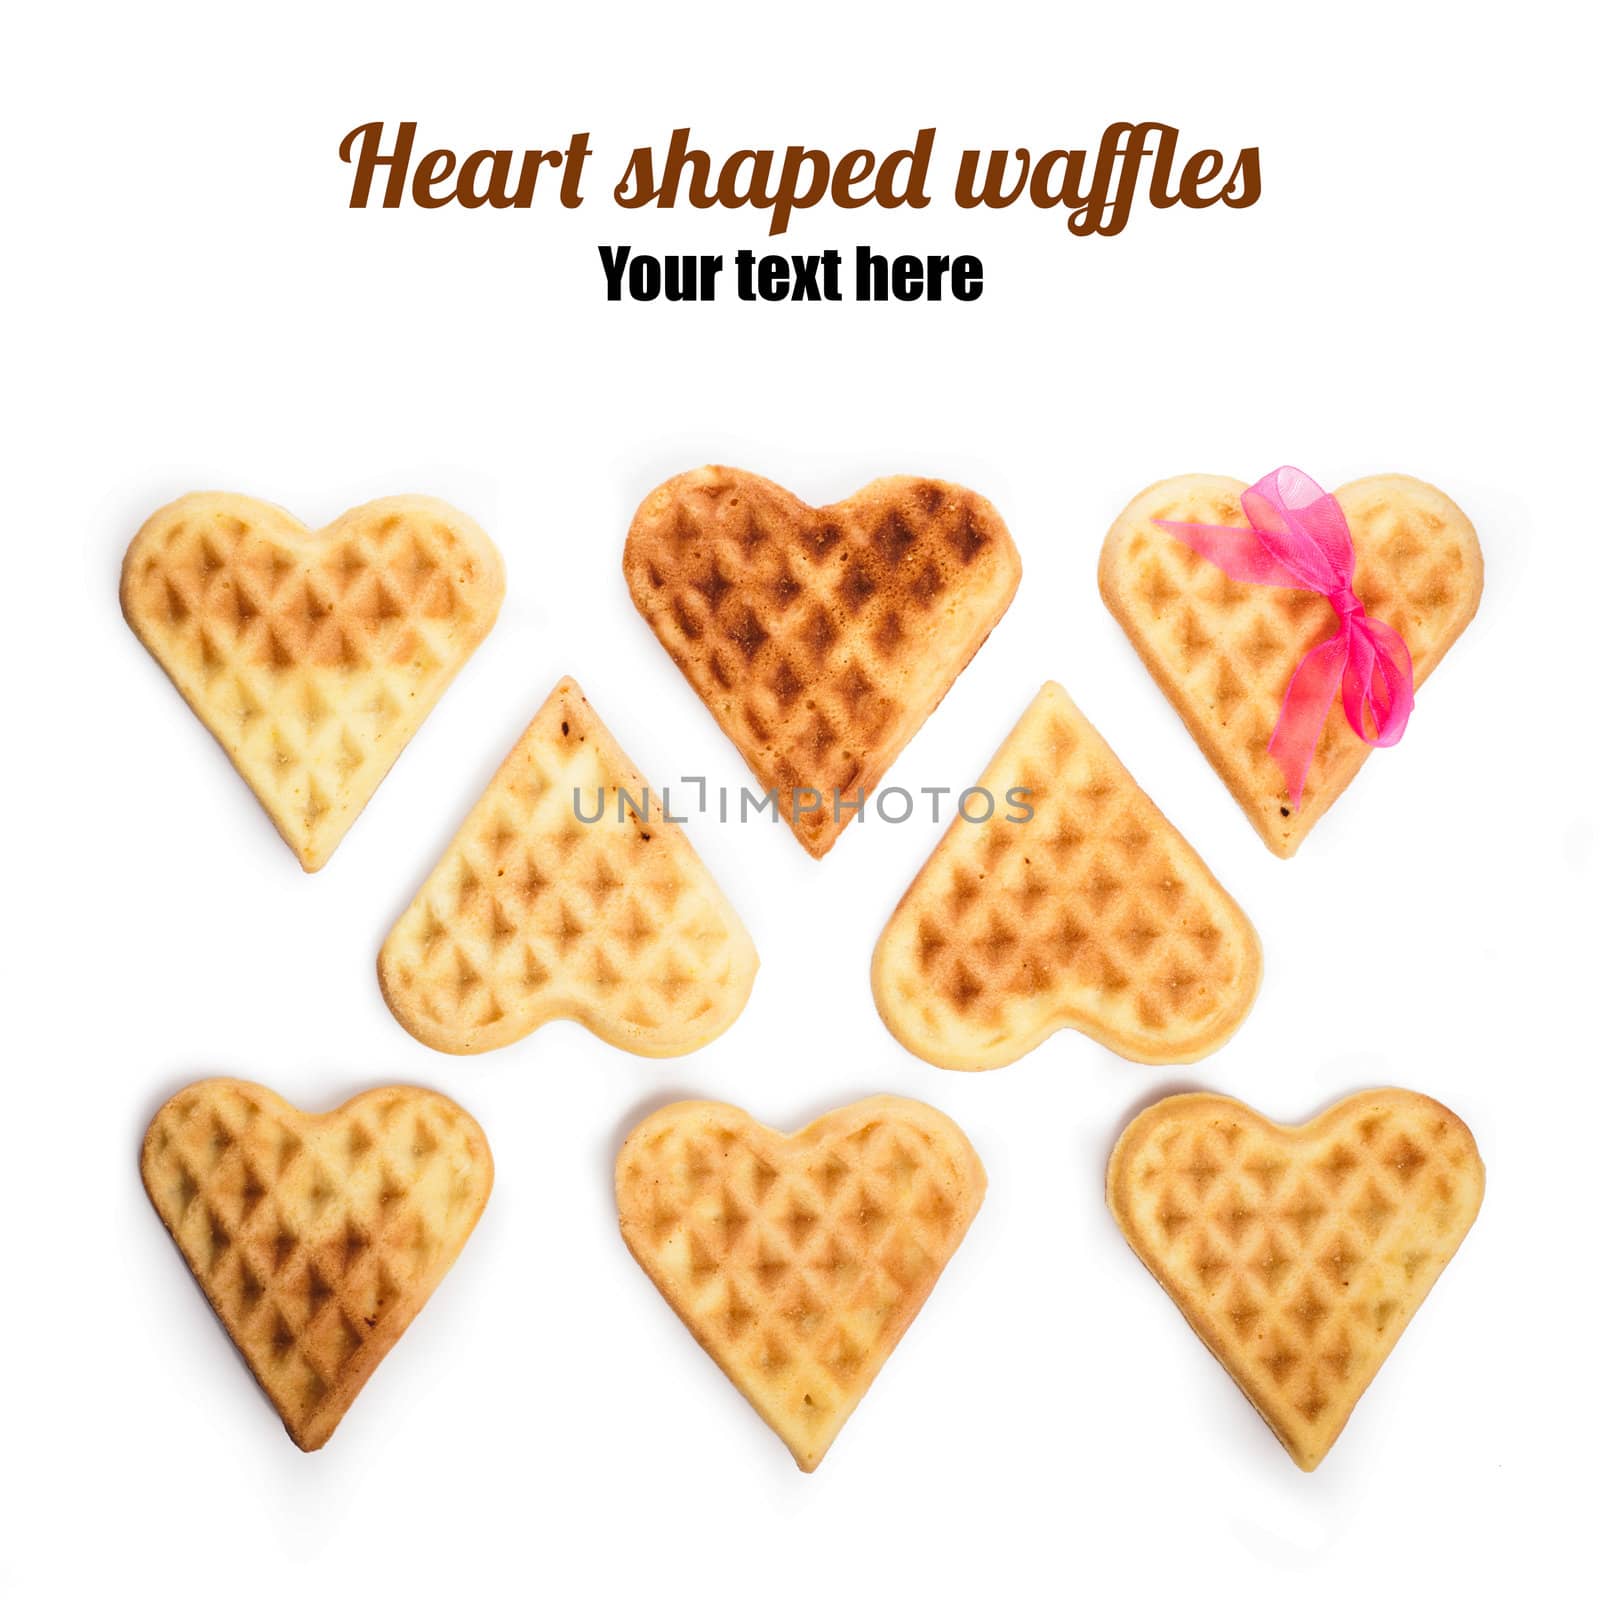 Eight heart shaped waffles by nvelichko